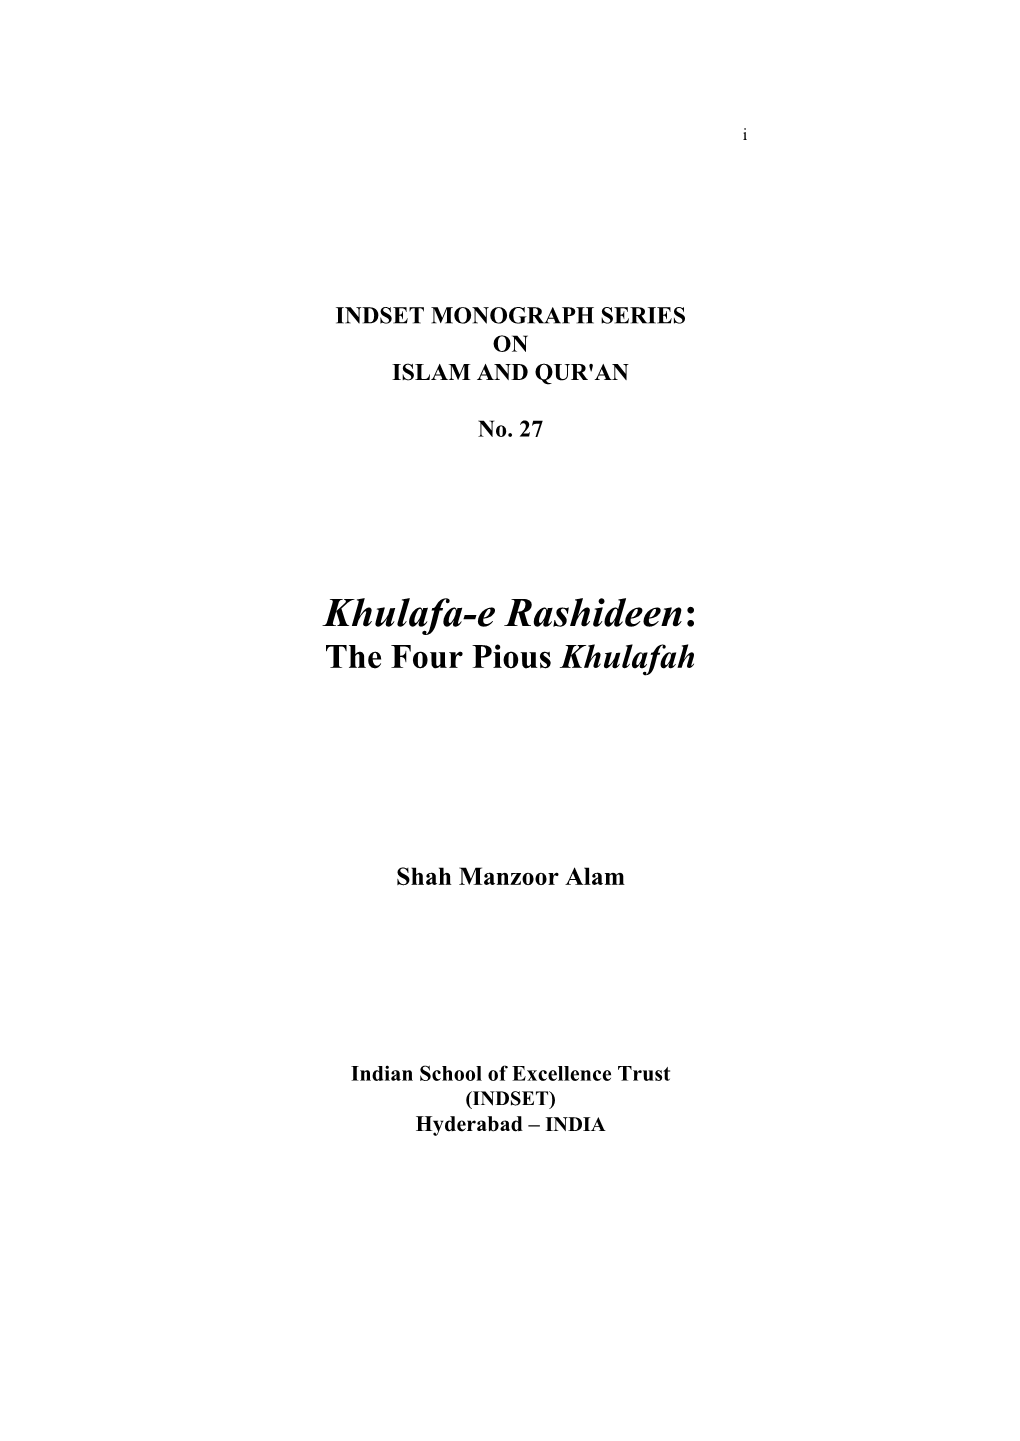 Khulafa-E Rashideen: the Four Pious Khulafah